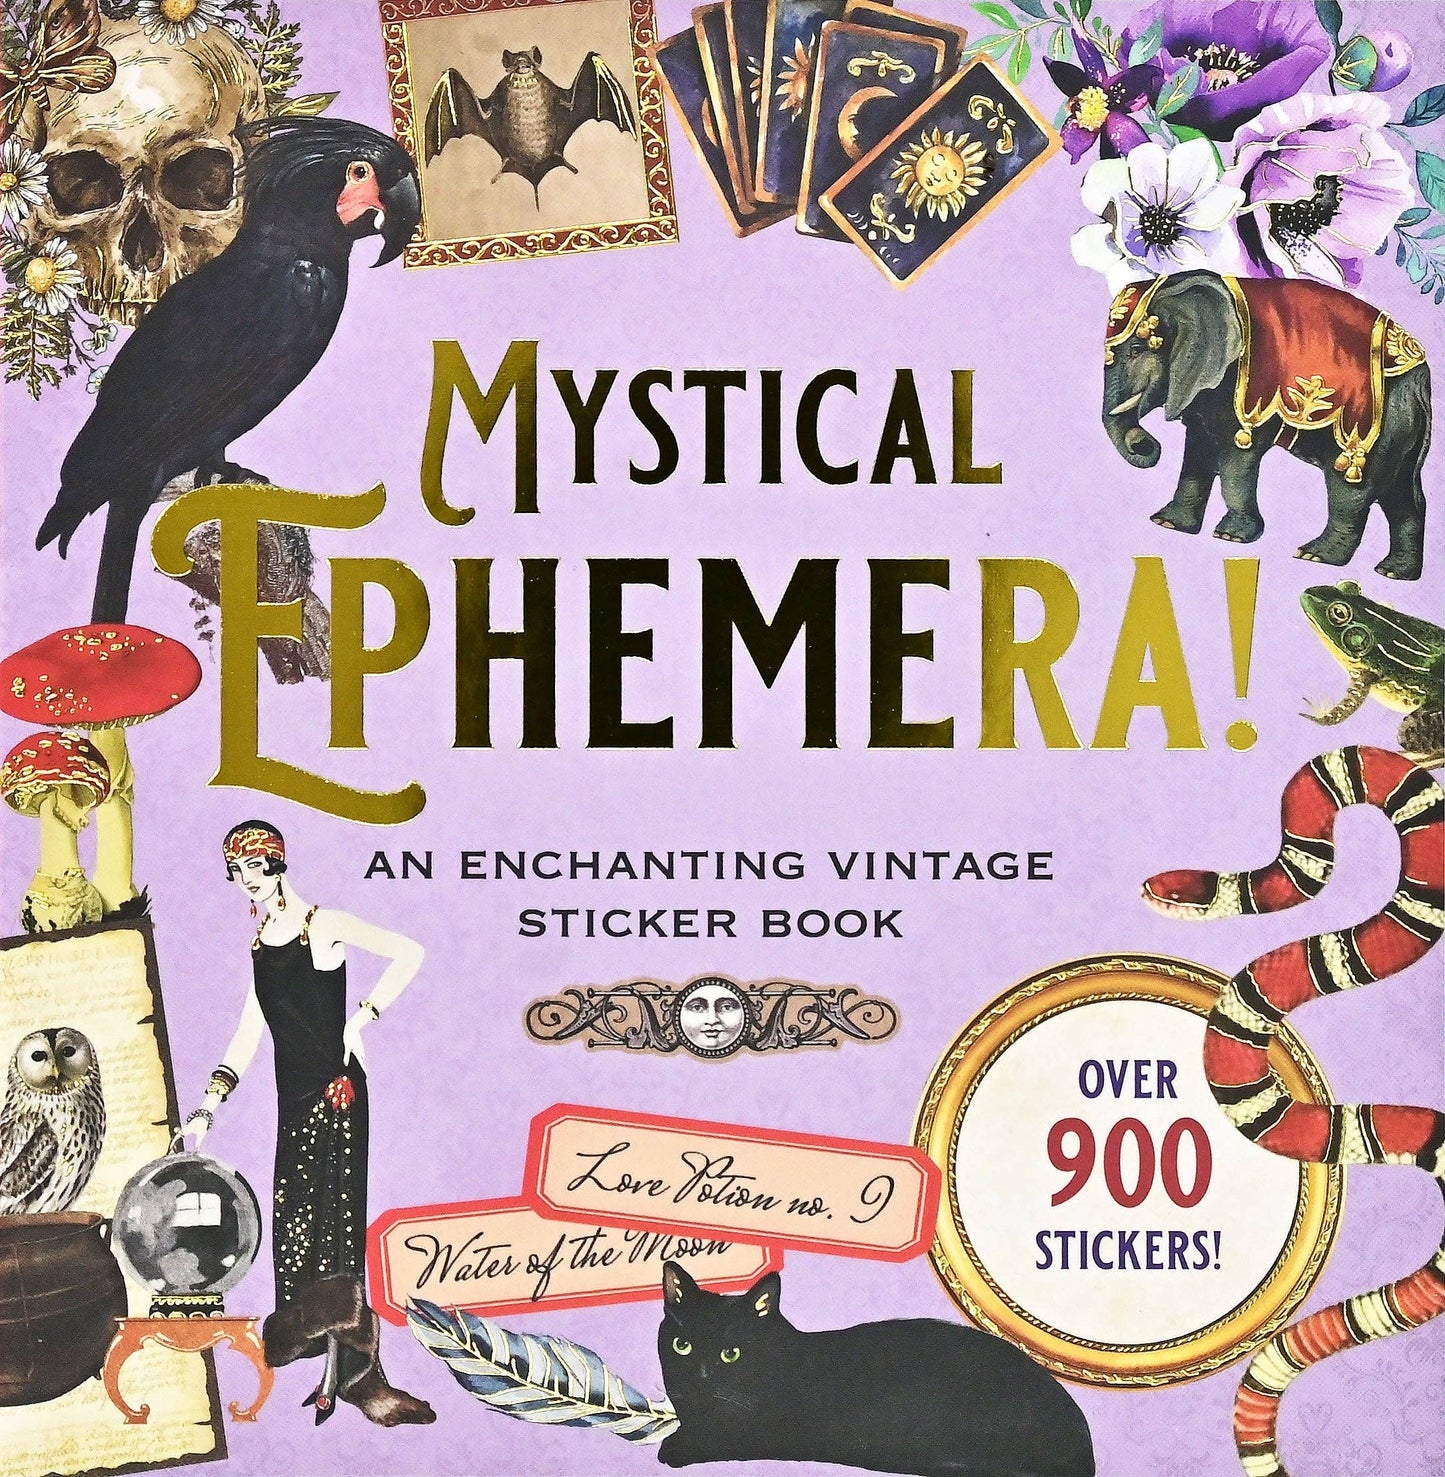 Peter Pauper Press - Mystical Ephemera! An Enchanting Vintage Sticker Book